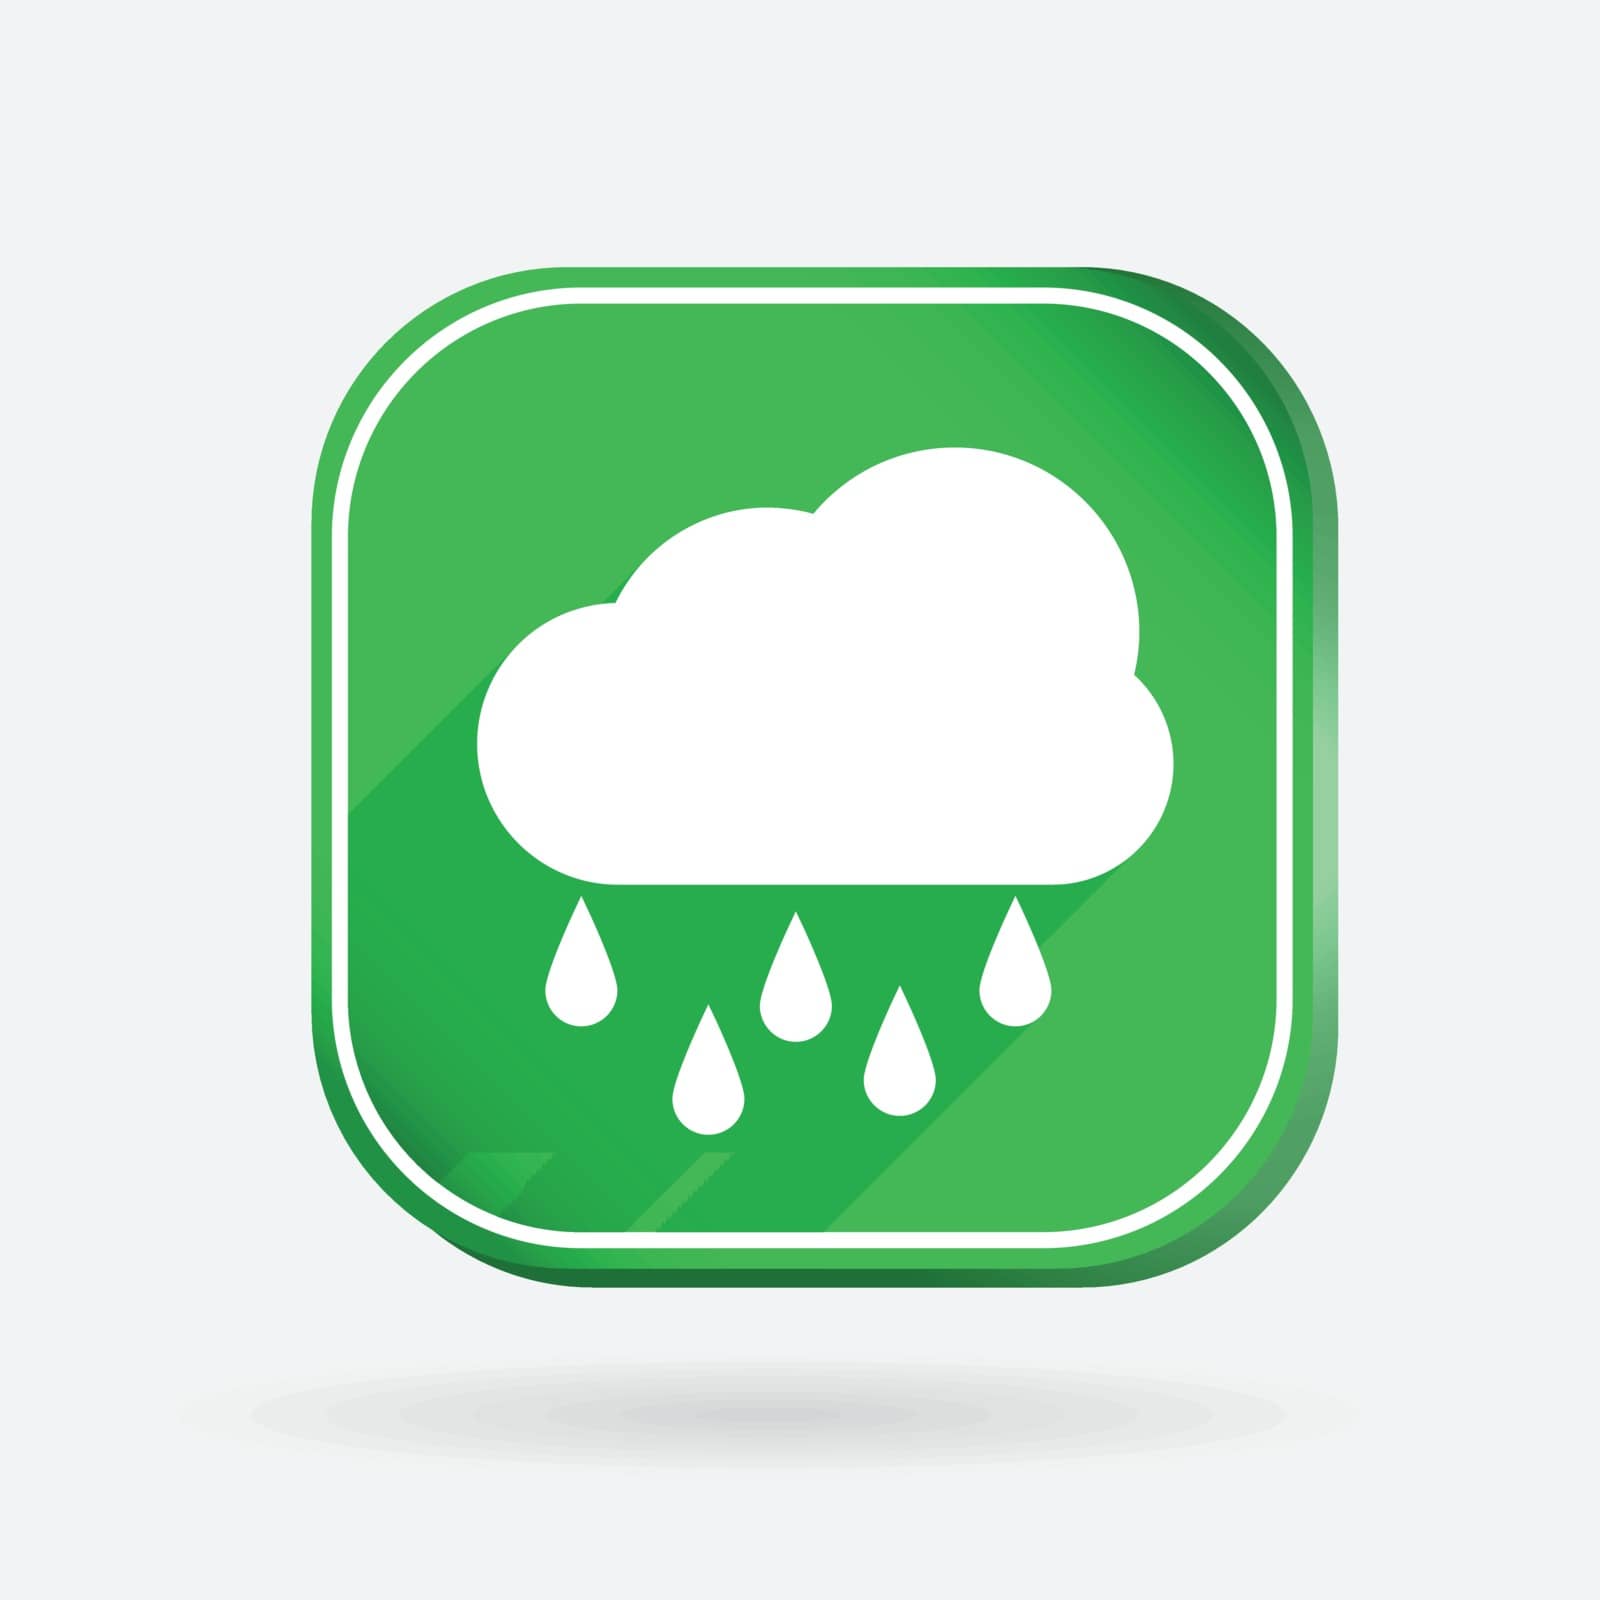 cloud rain.  Color square icon by LittleCuckoo